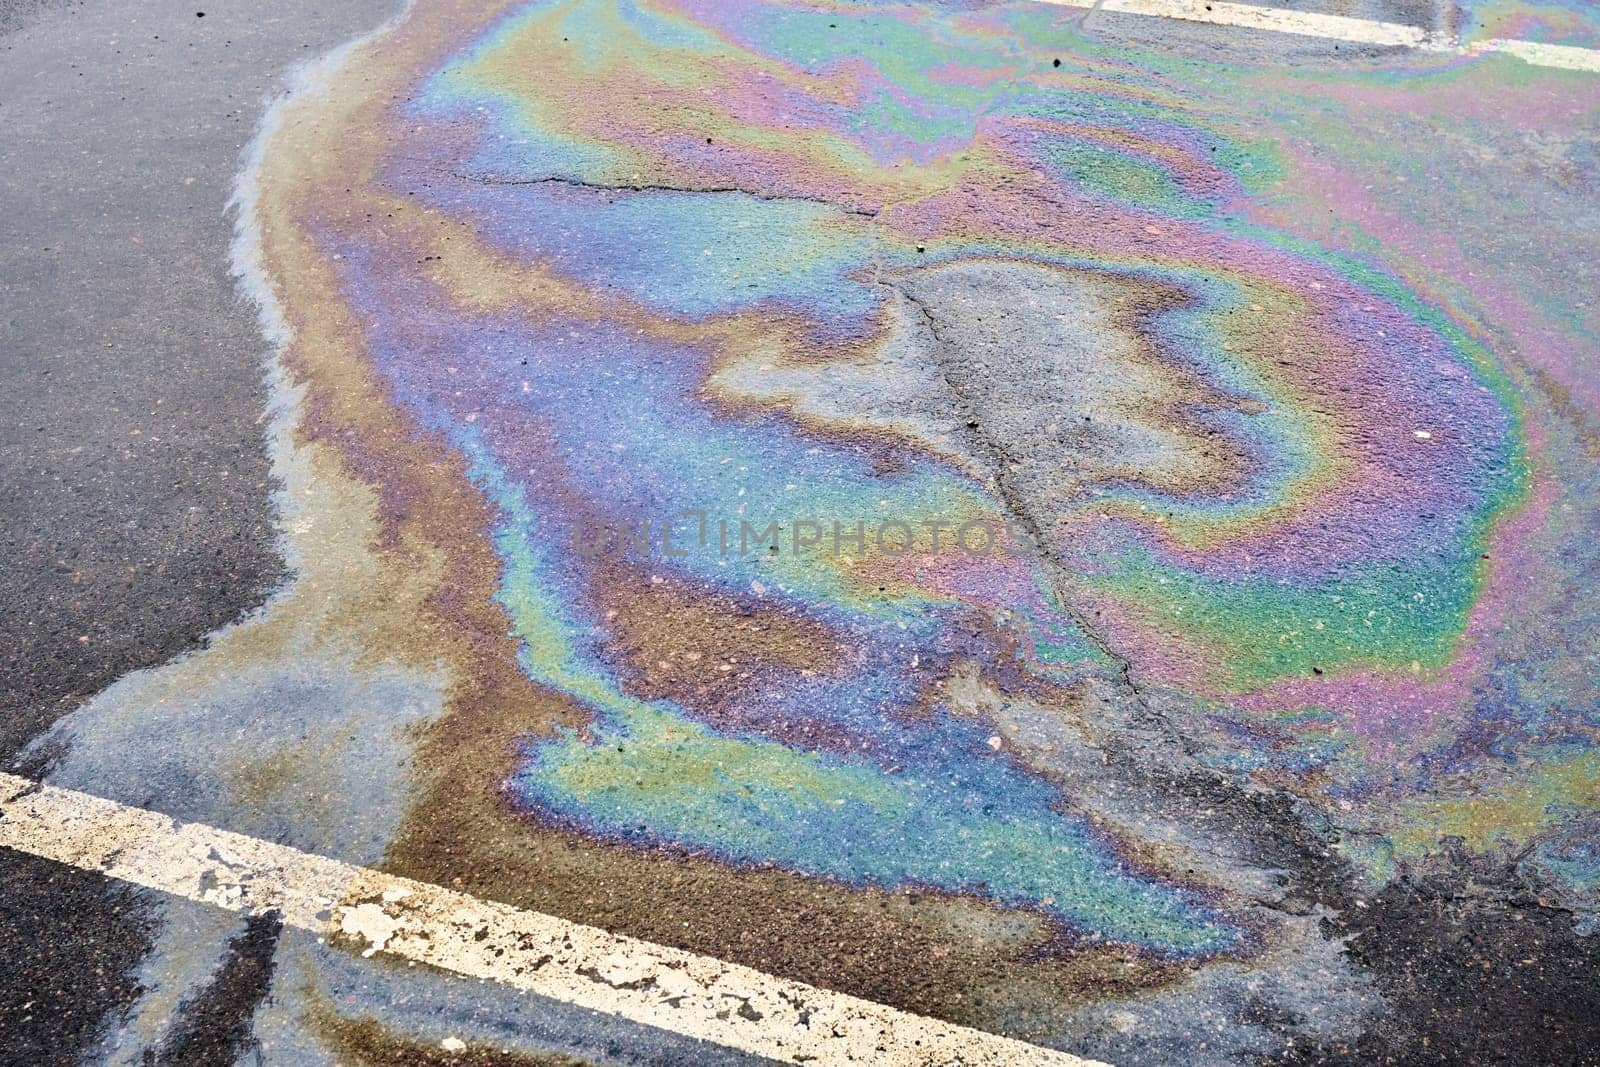 Wet asphalt parking lot with a visible oil spill and dividing line